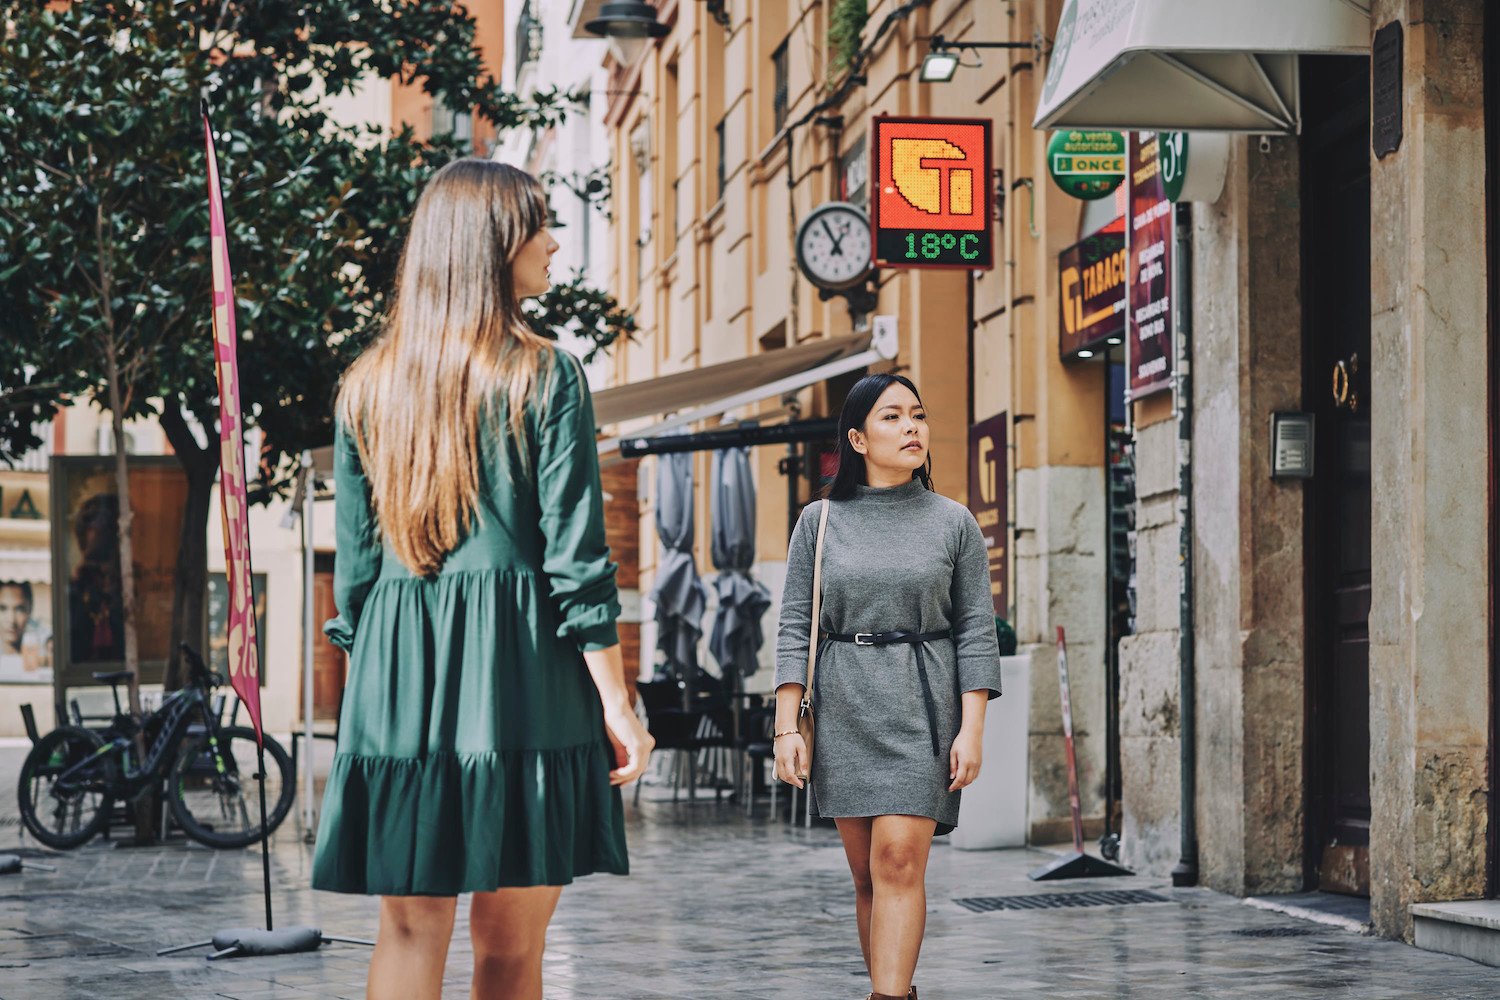 PlaceIQ-Malaga-Retail-Mobility-Urban-Pedestrian-Woman-Women-Walking